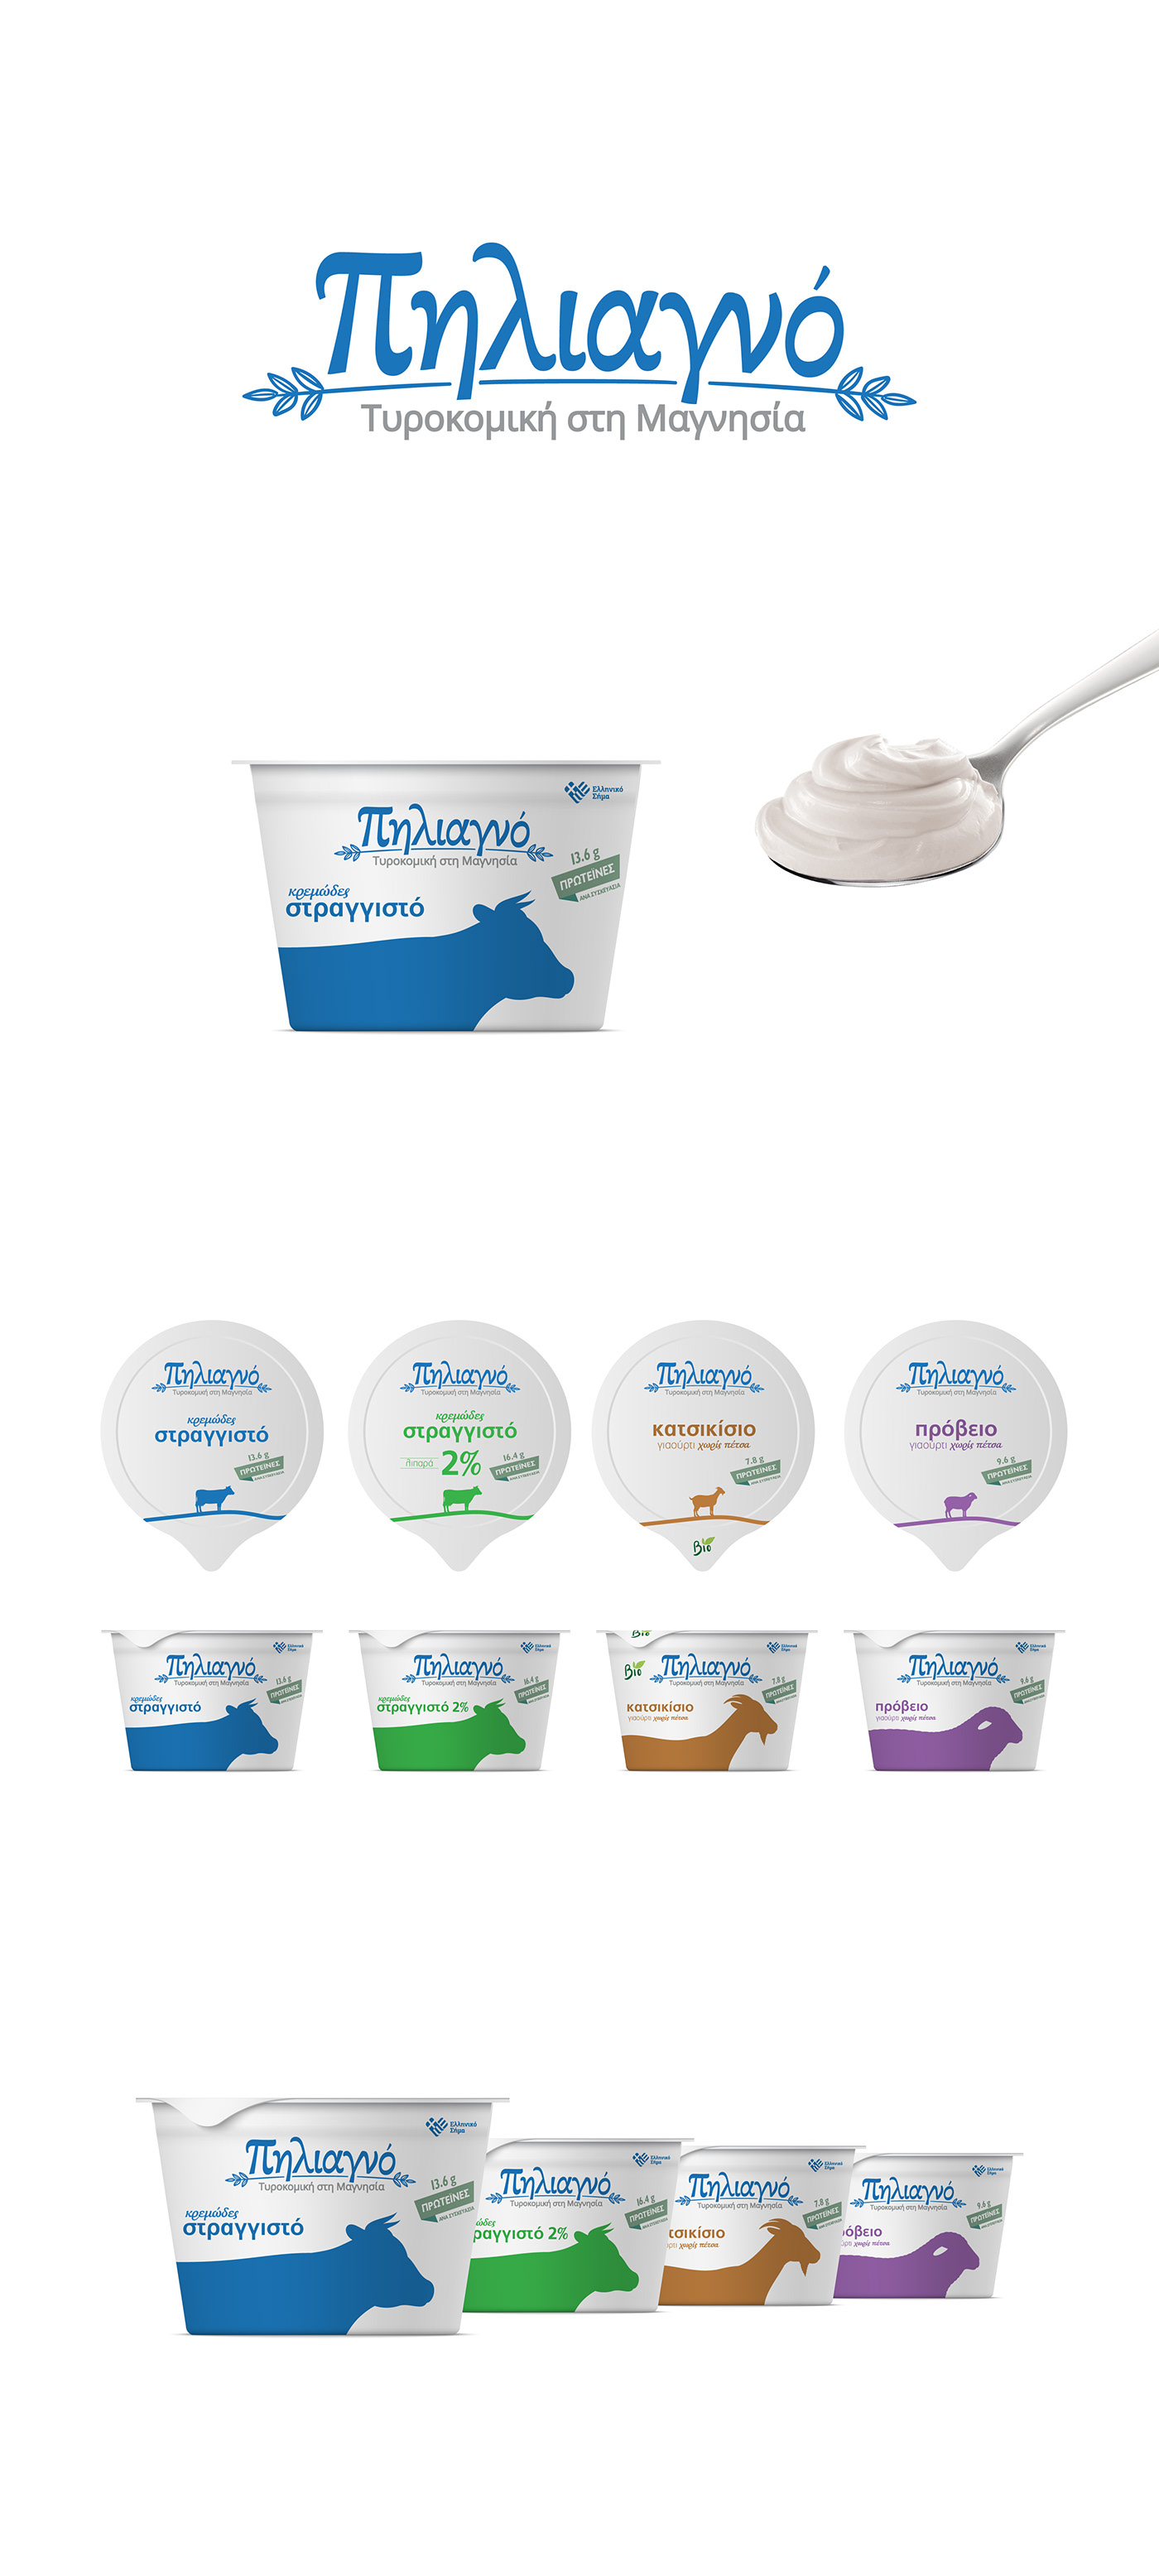 brabding logo brand identity Packaging yogurt dairy products Food  Brand Design